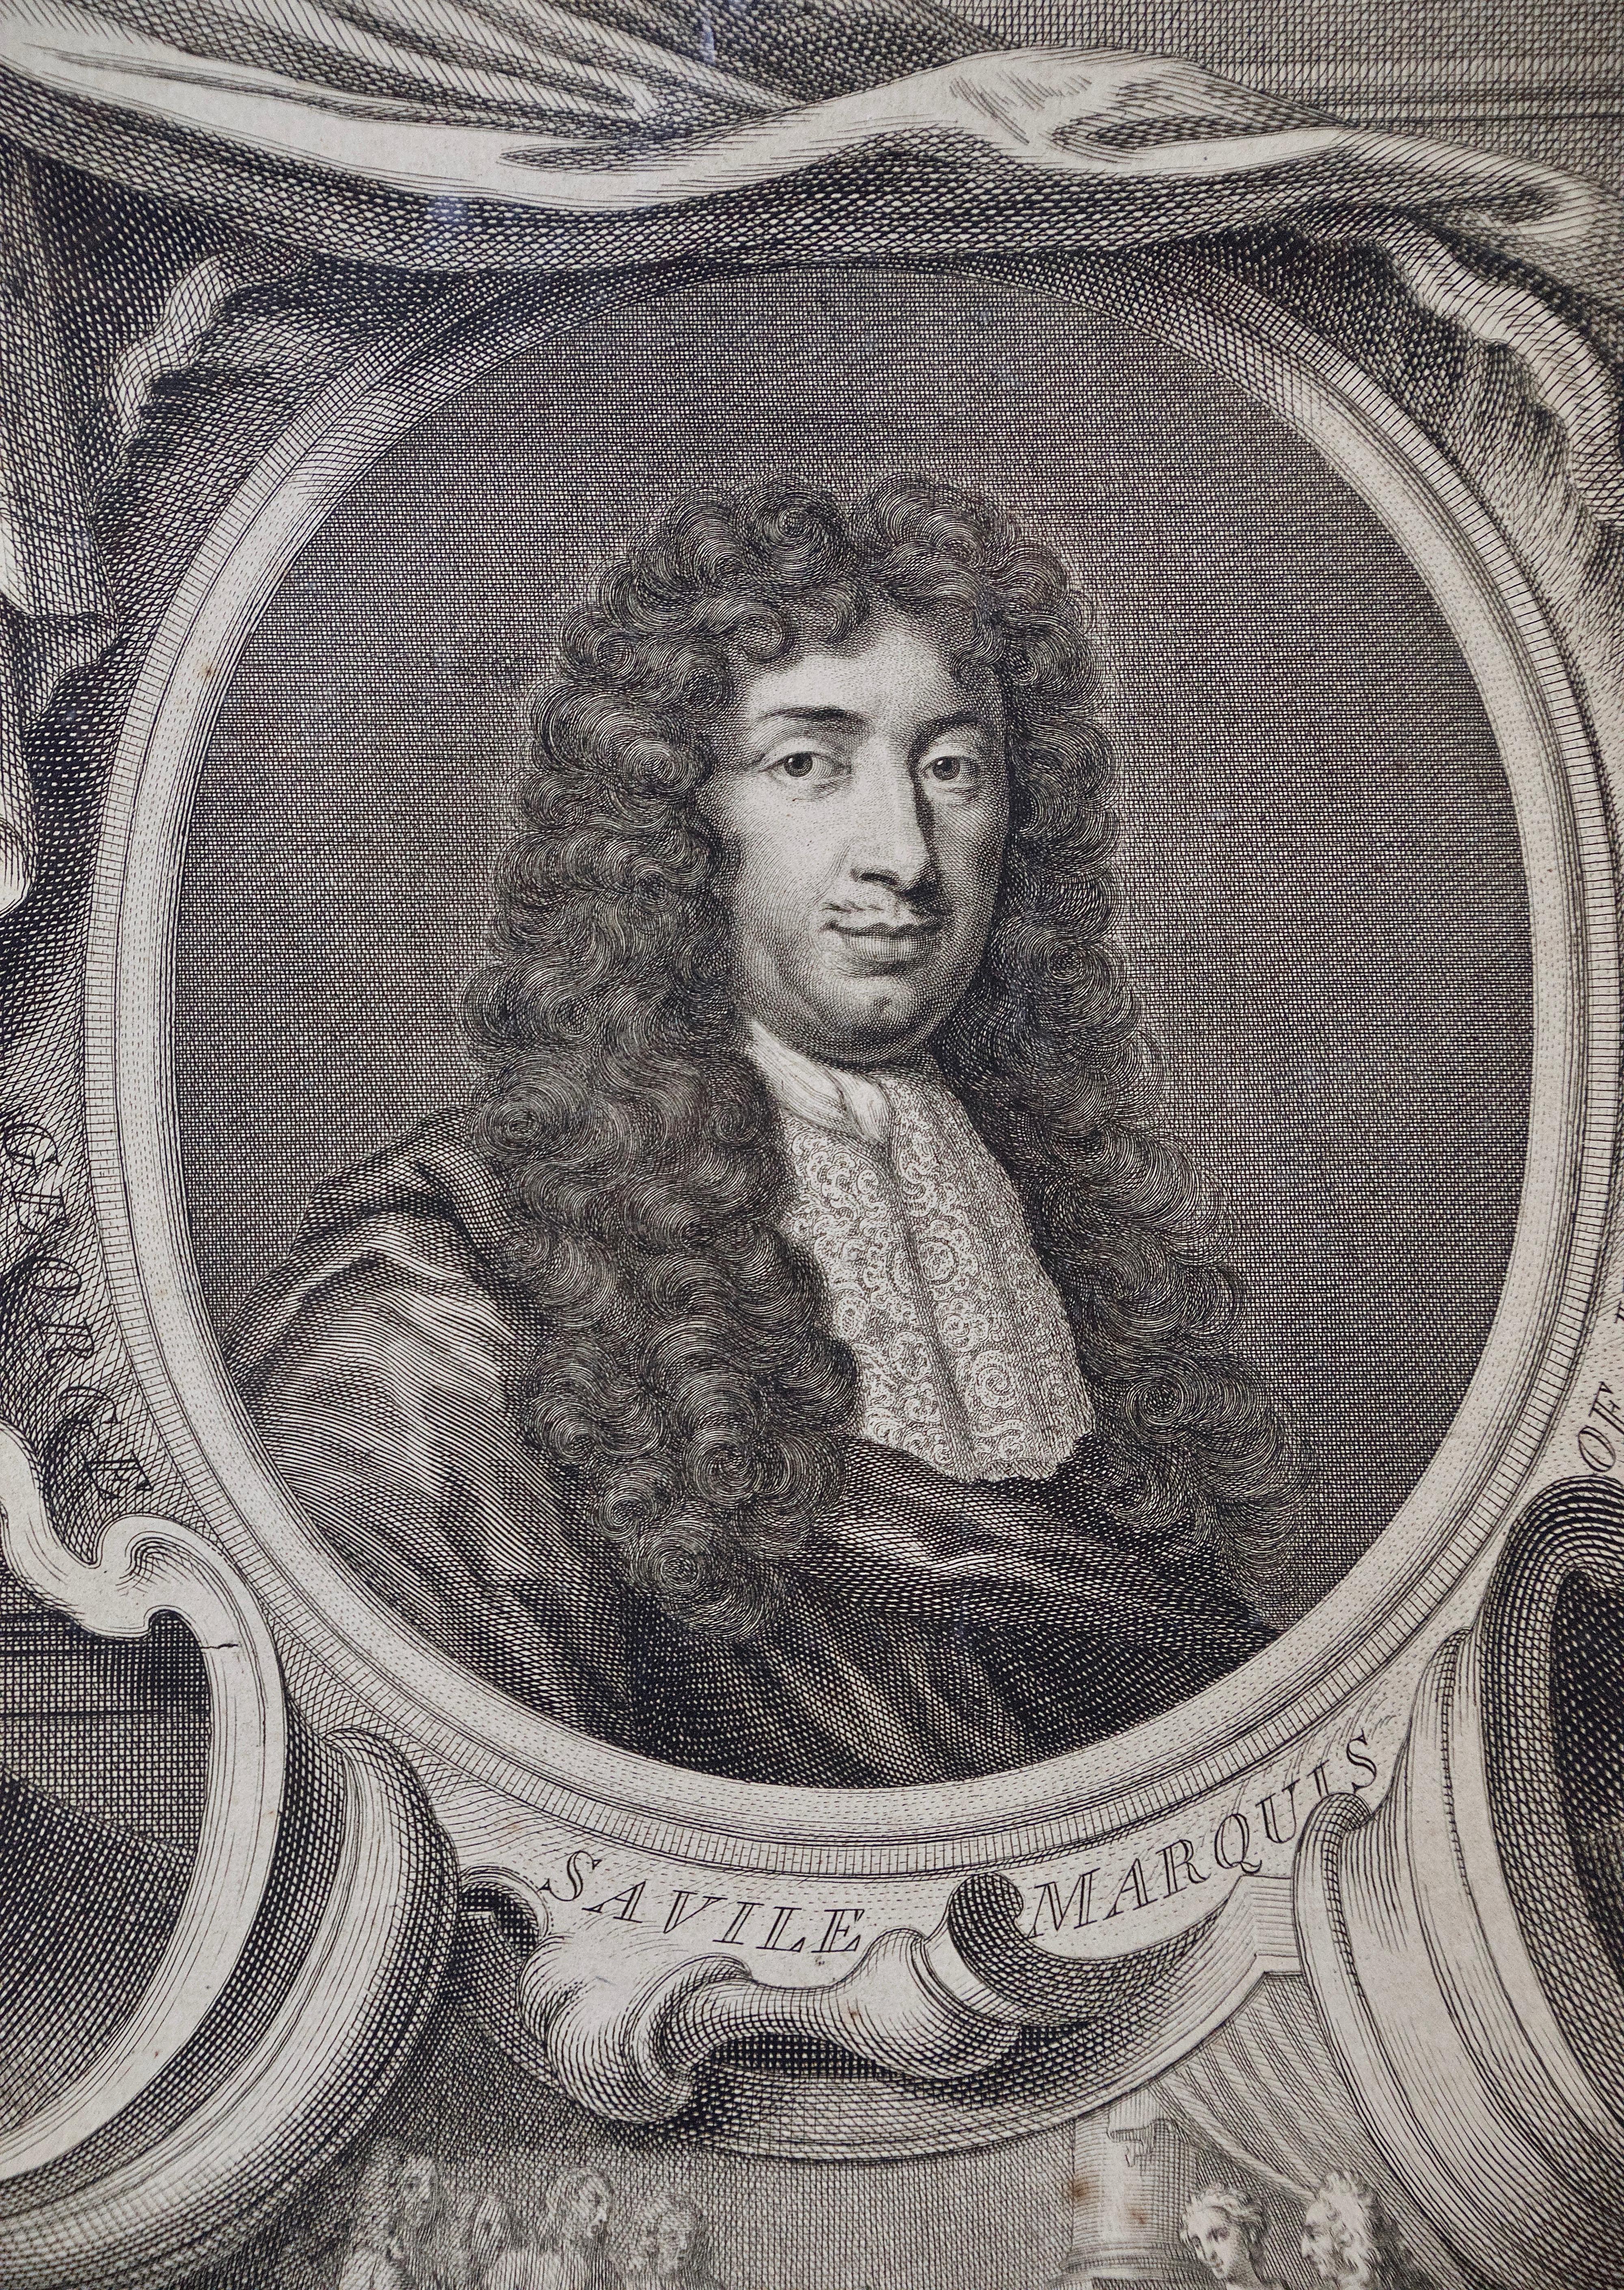 18th Century Engraved Portrait of George Savile, Marquis of Halifax by Houbraken - Print by Jacobus Houbraken 